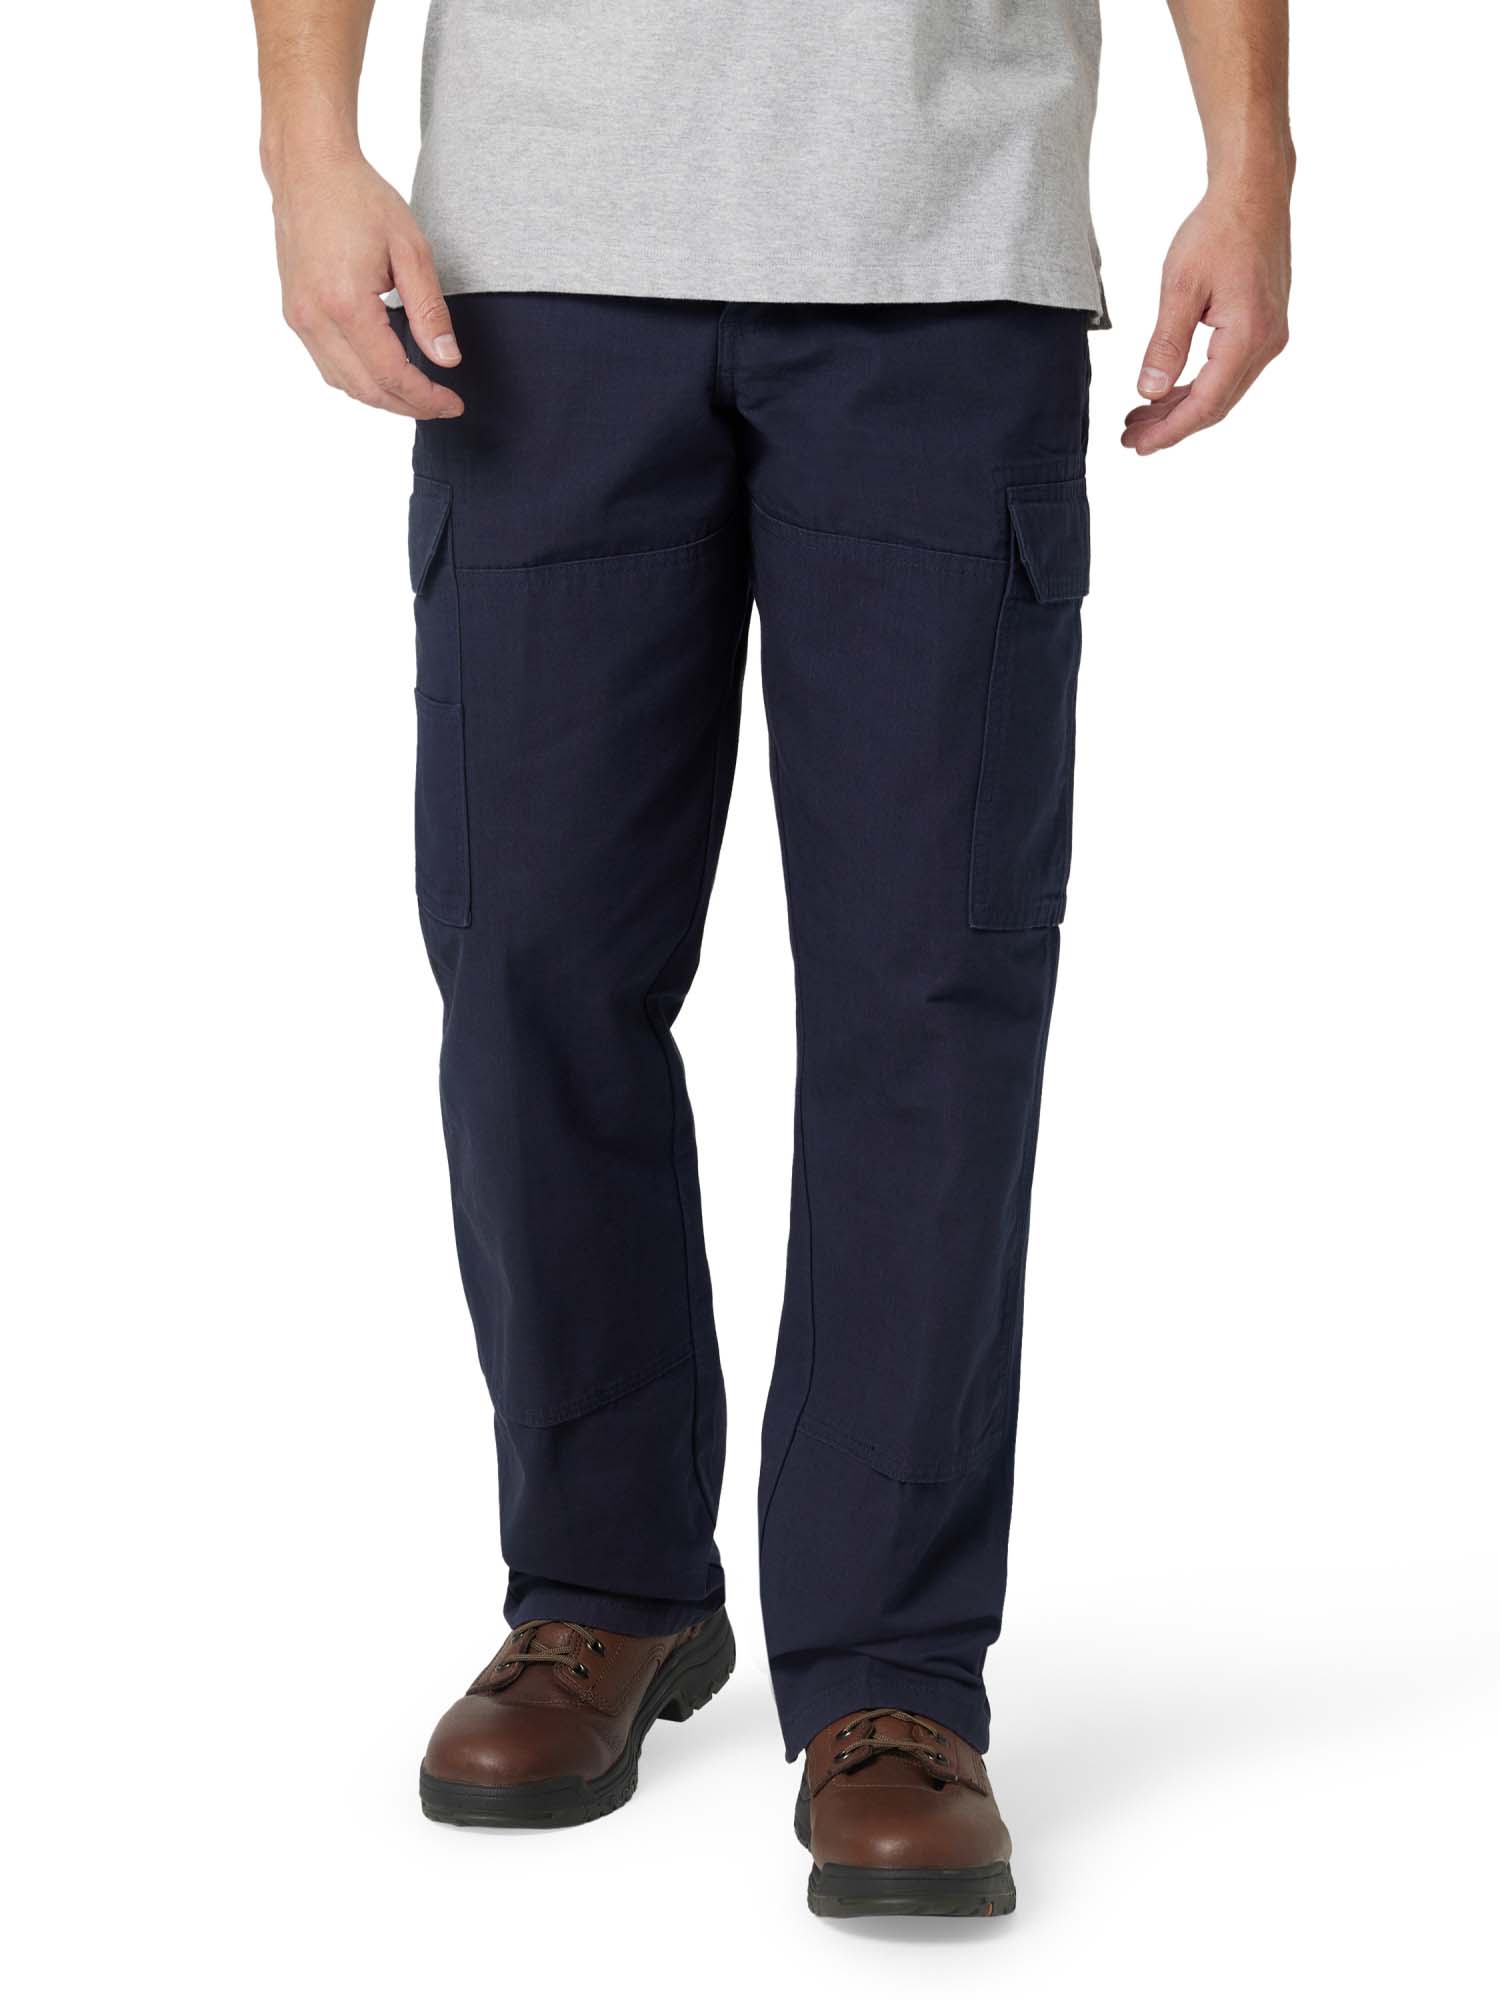 Men's Wrangler Workwear Ranger Cargo Pant, Sizes 32-44 - Walmart.com